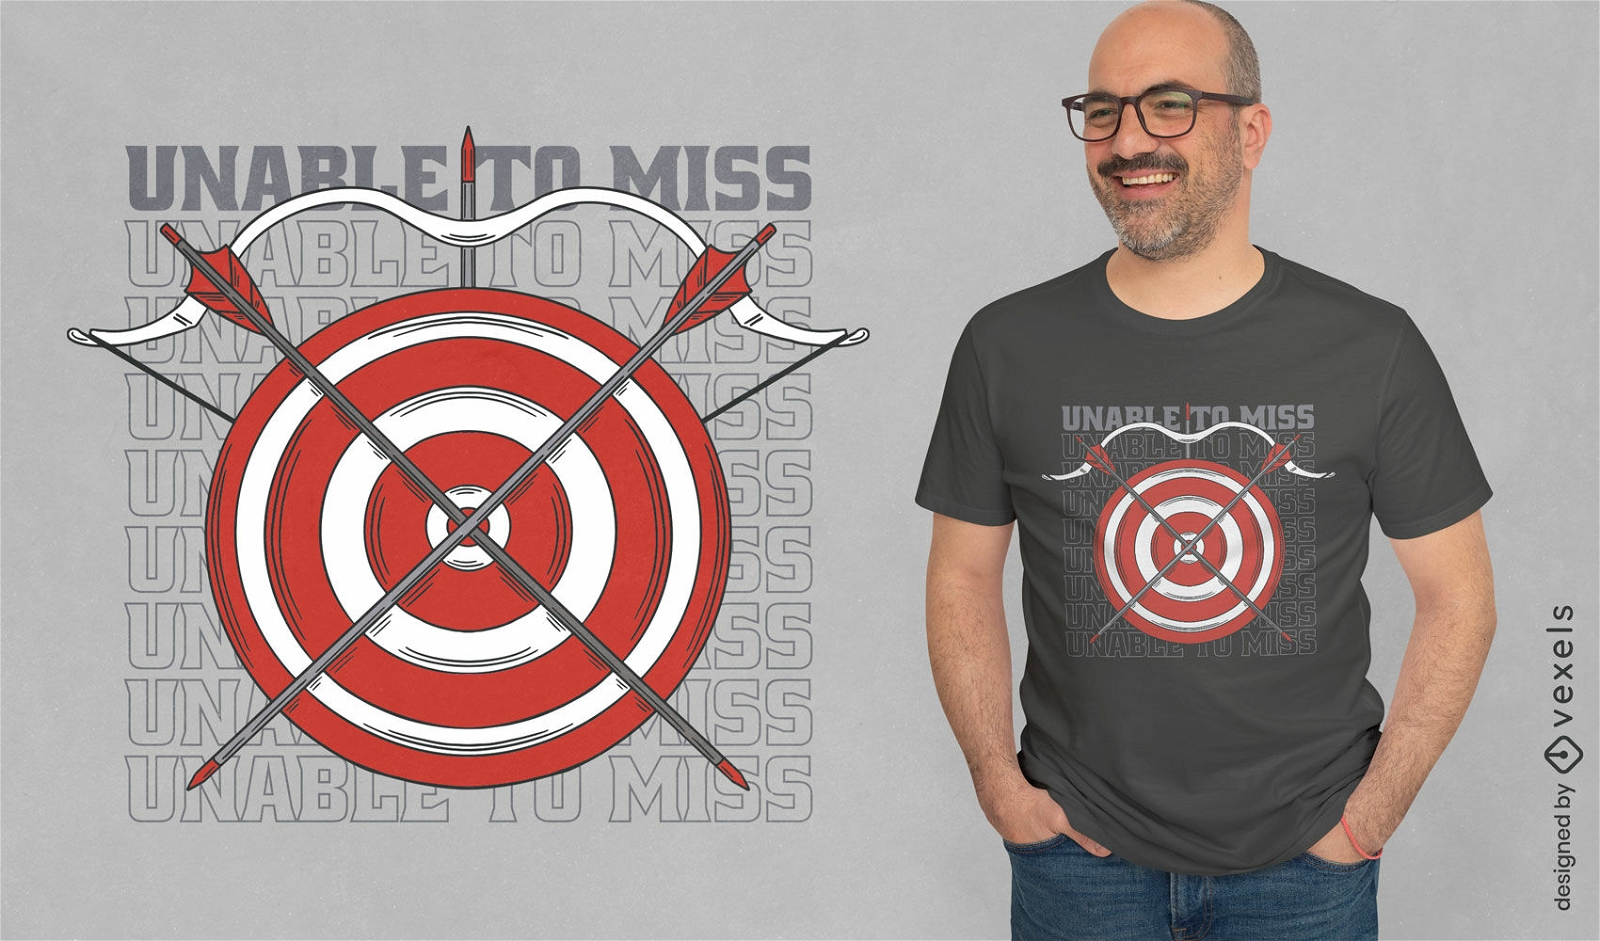 Archery target quote t-shirt design